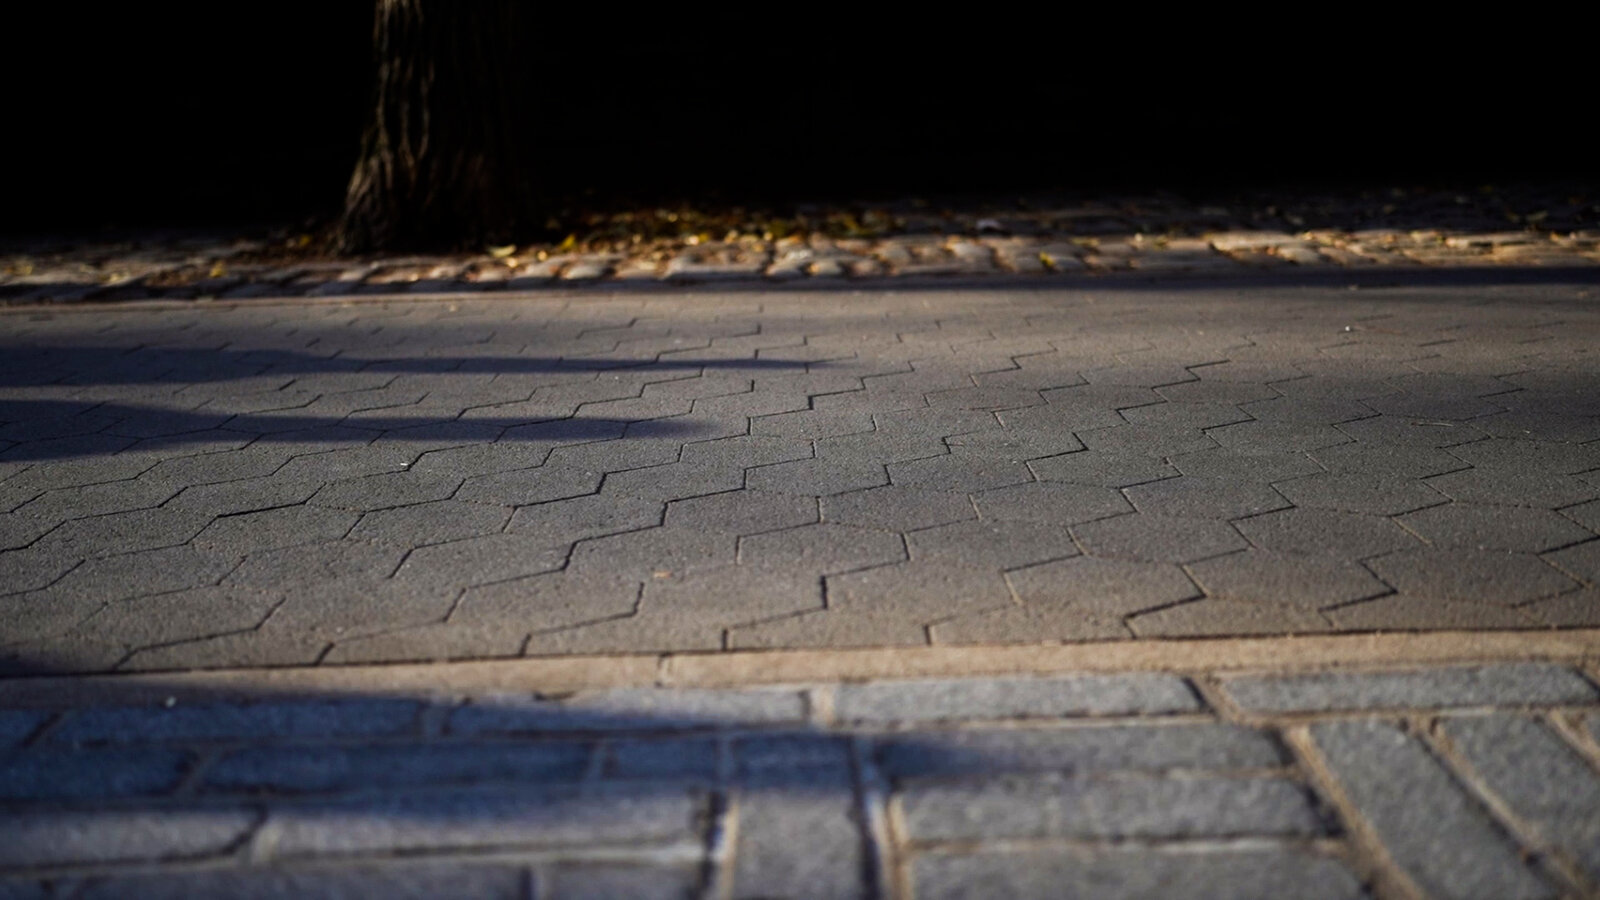 Fixing Central Park’s Bumpy Sidewalks